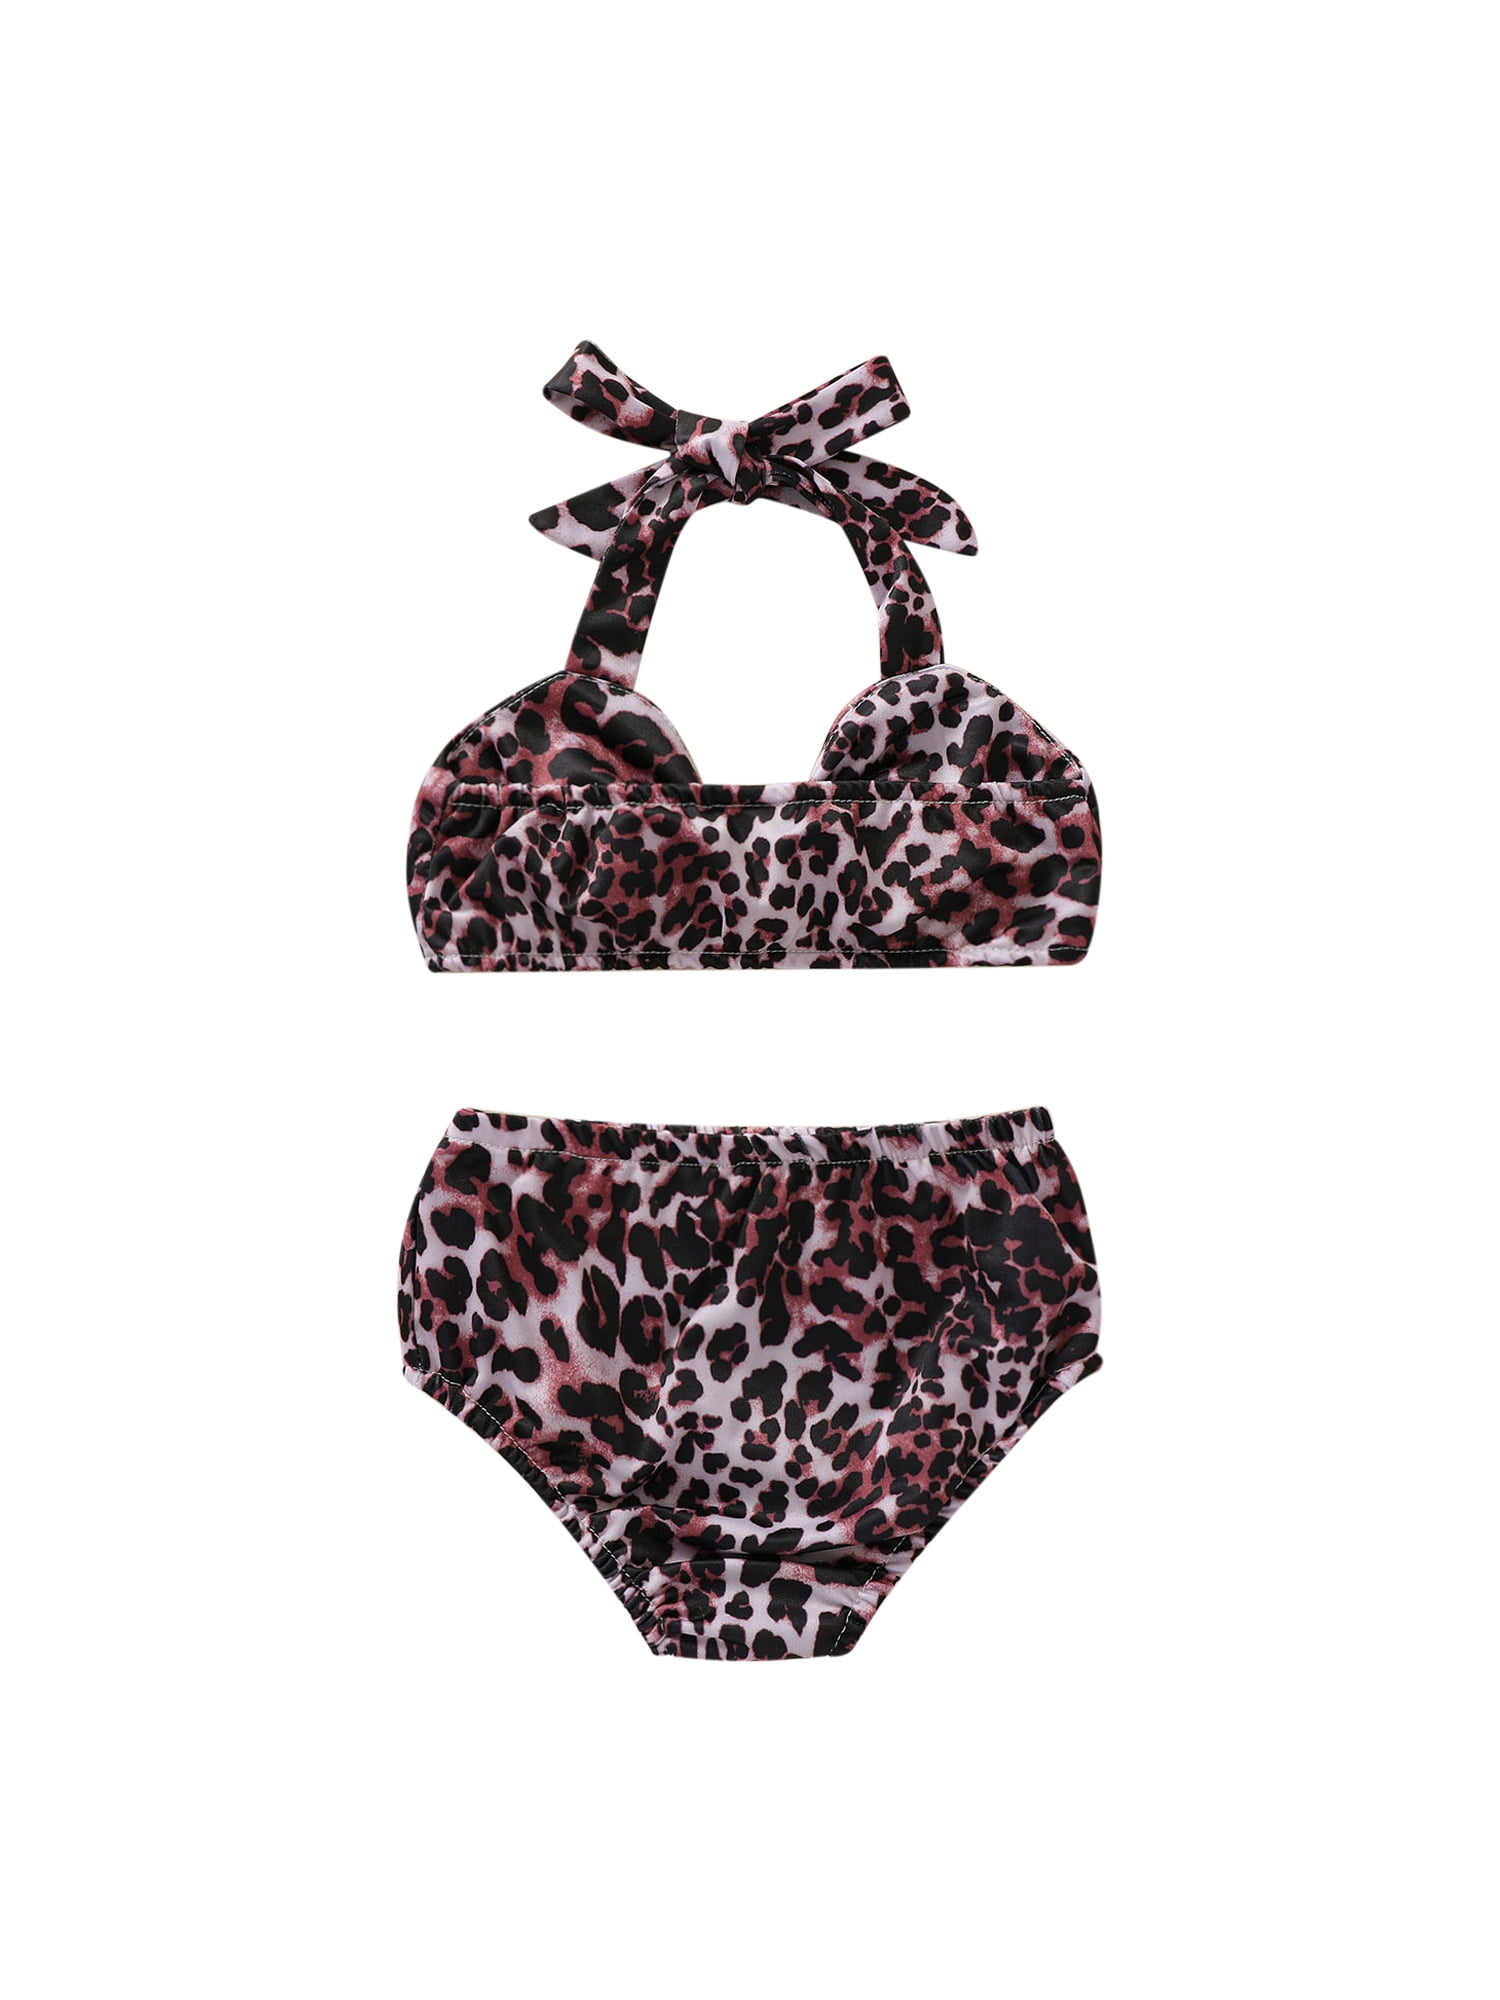 Baby Girls 2-4T Two Piece Swimwear Bathing Suit Cute Floral Bowknot Rash Guard Swimsuits Leopard Skort UPF50+ 